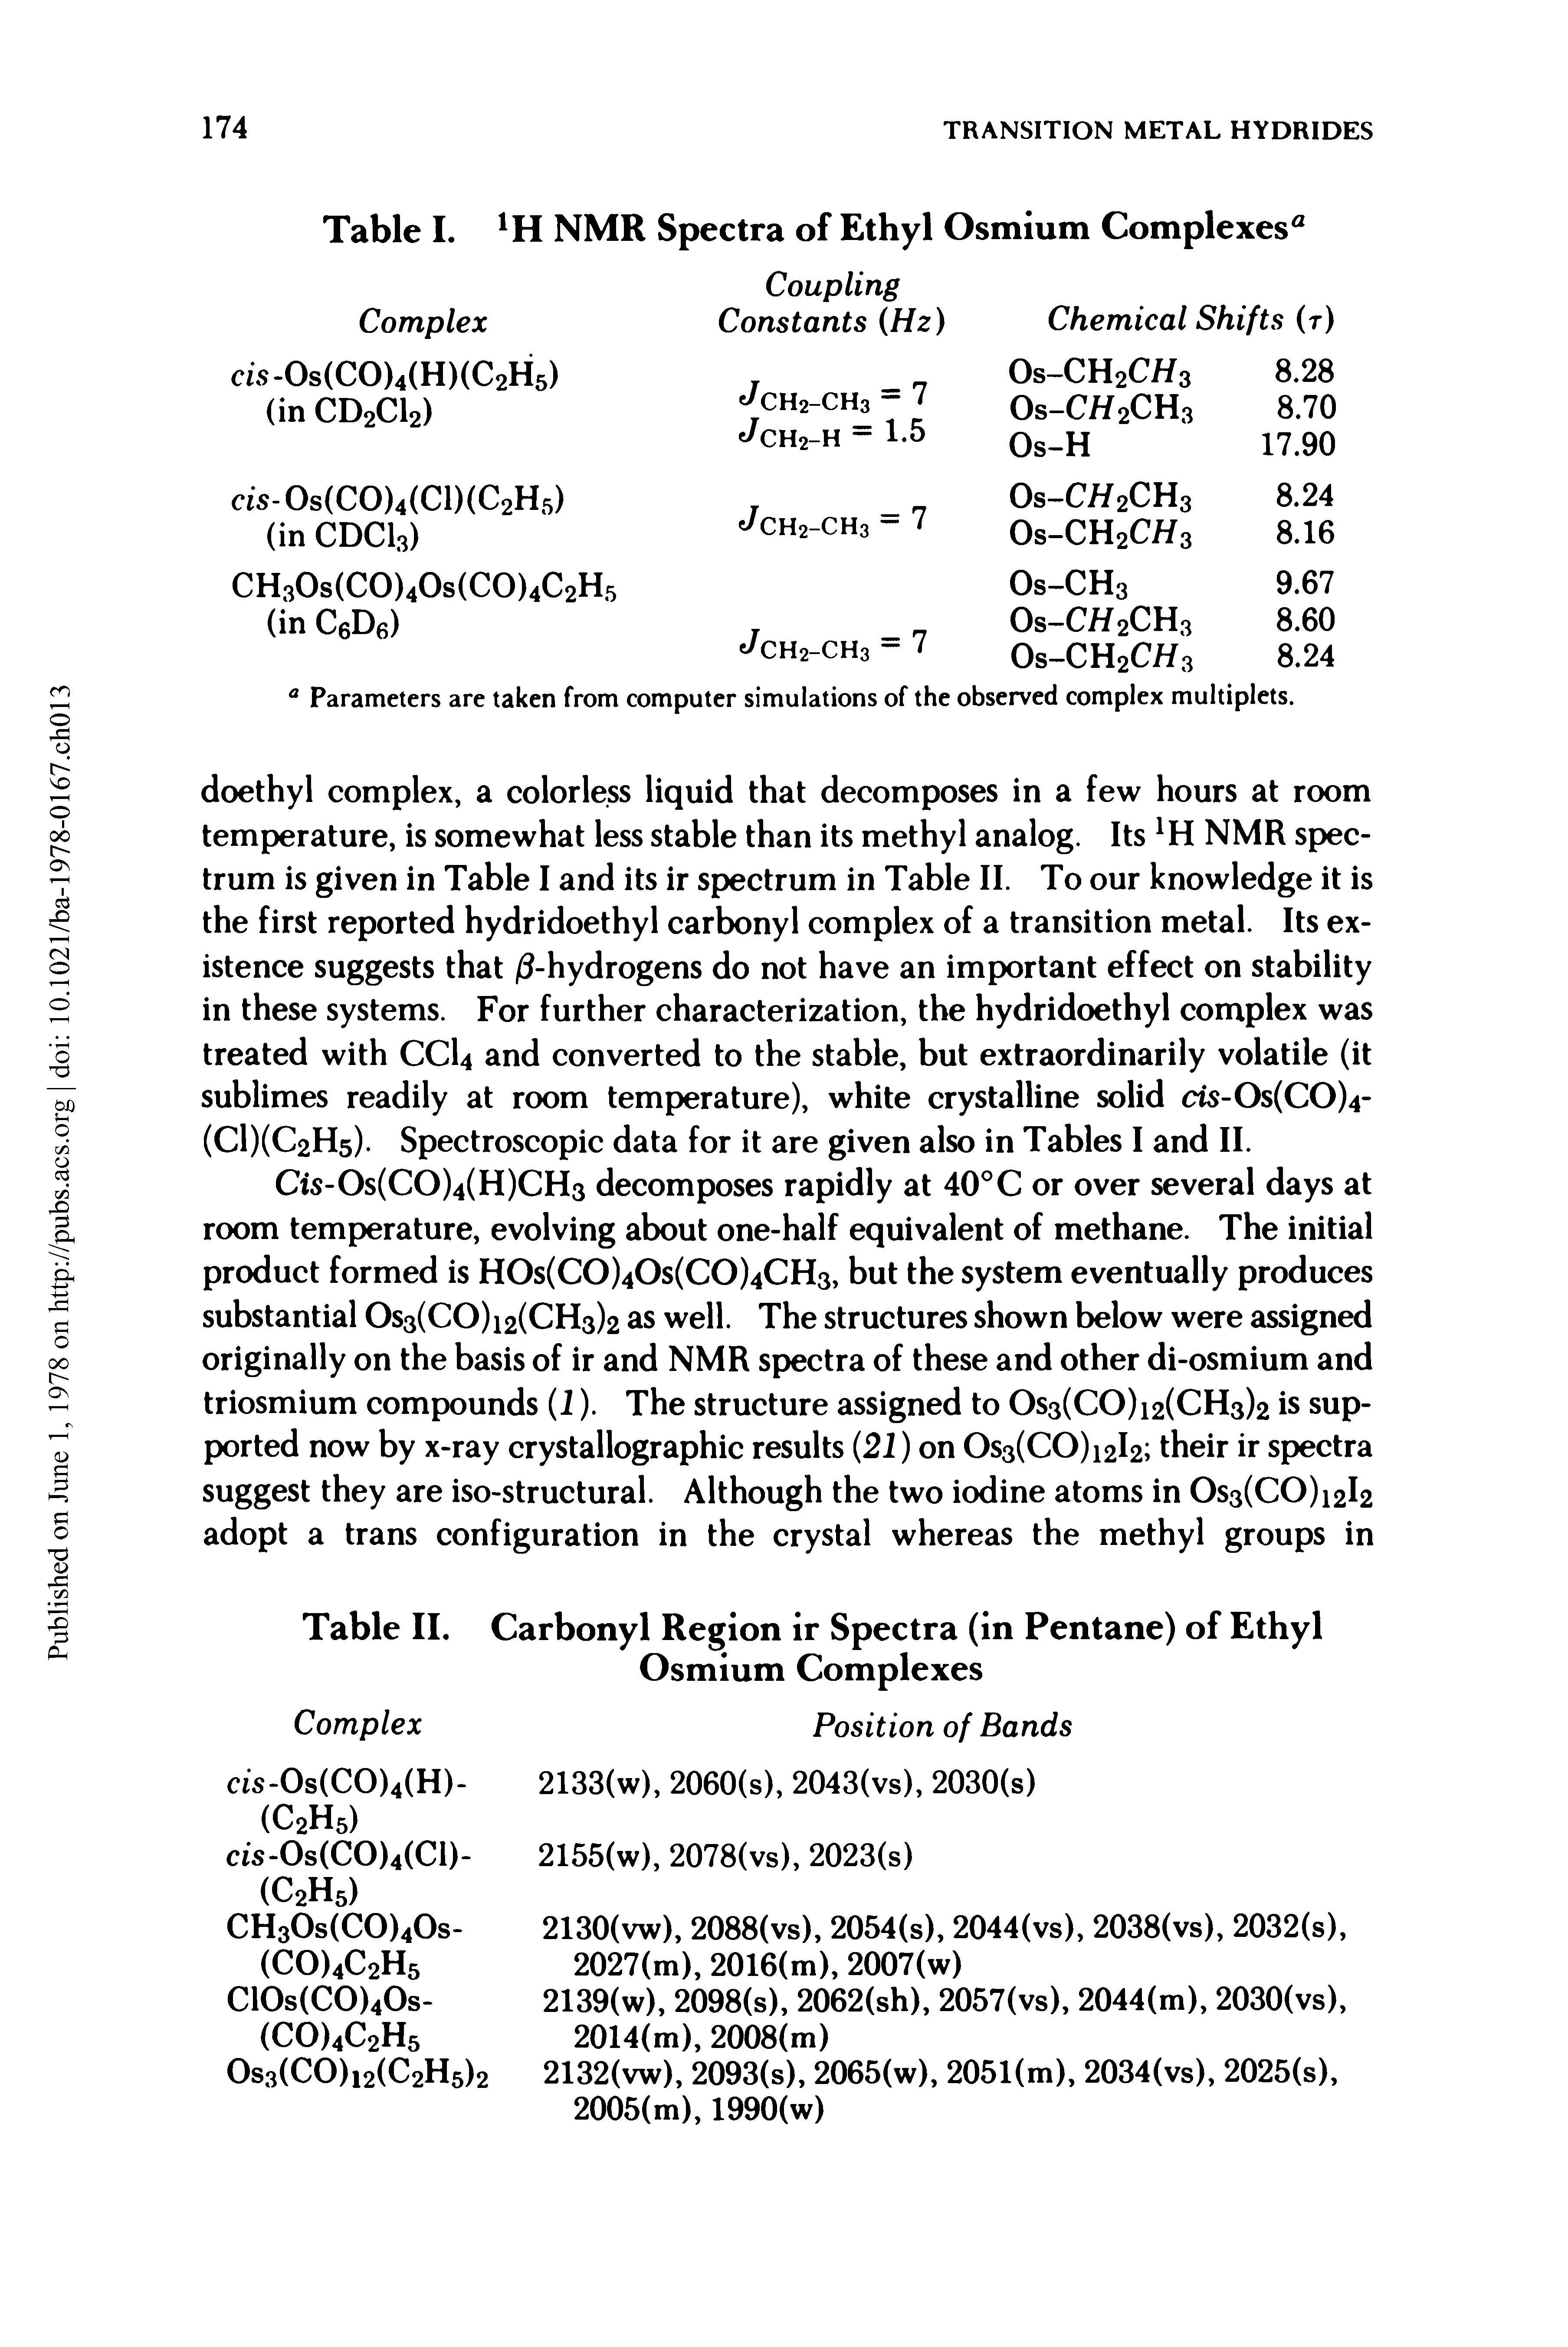 Table II. Carbonyl Region ir Spectra (in Pentane) of Ethyl Osmium Complexes...